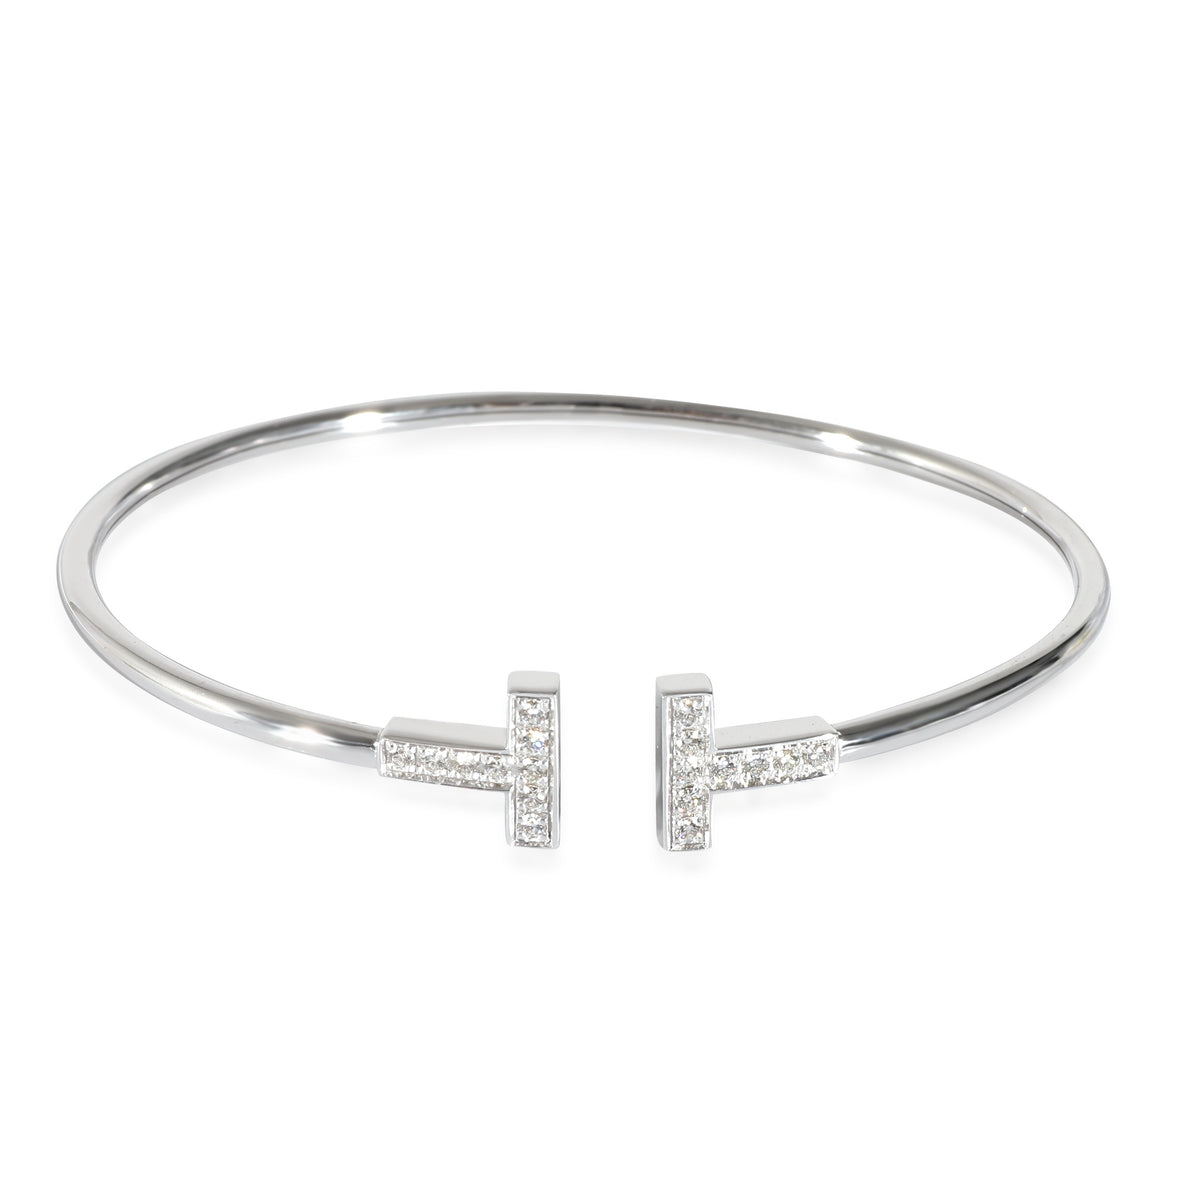 Tiffany & Co. Tiffany T Diamond Bracelet in 18k White Gold 0.74 CTW